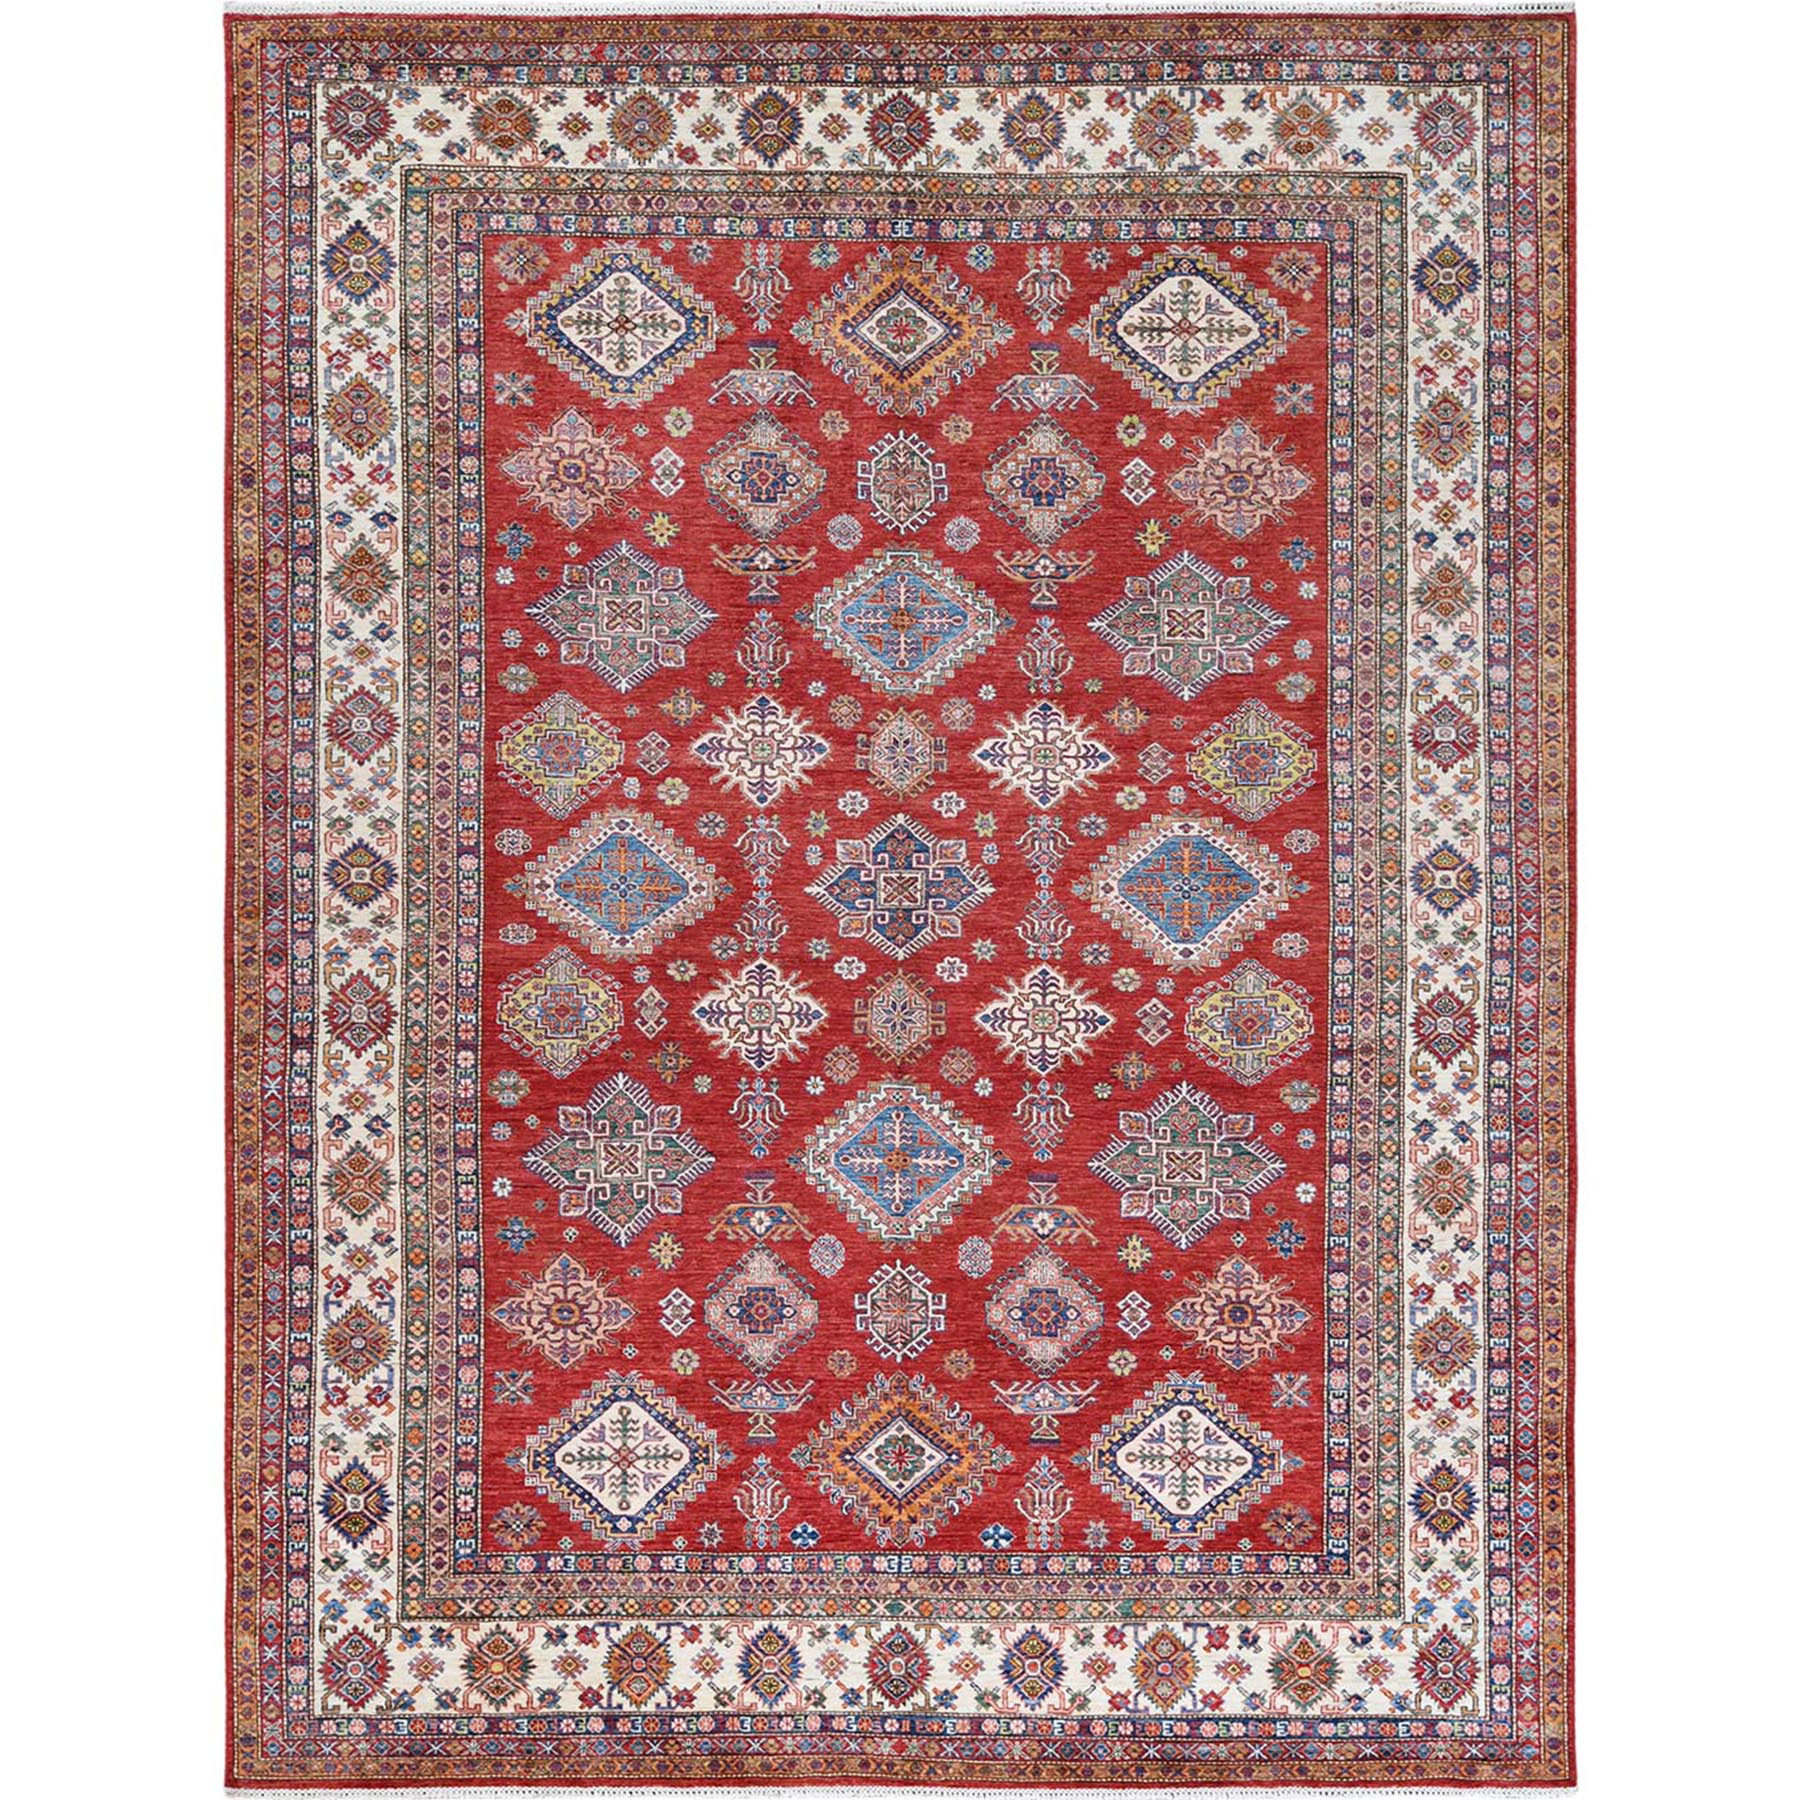 10'1"x13'6" Vibrant Organic Wool Red Super Kazak with Geometric Design Hand Woven Oriental Rug 